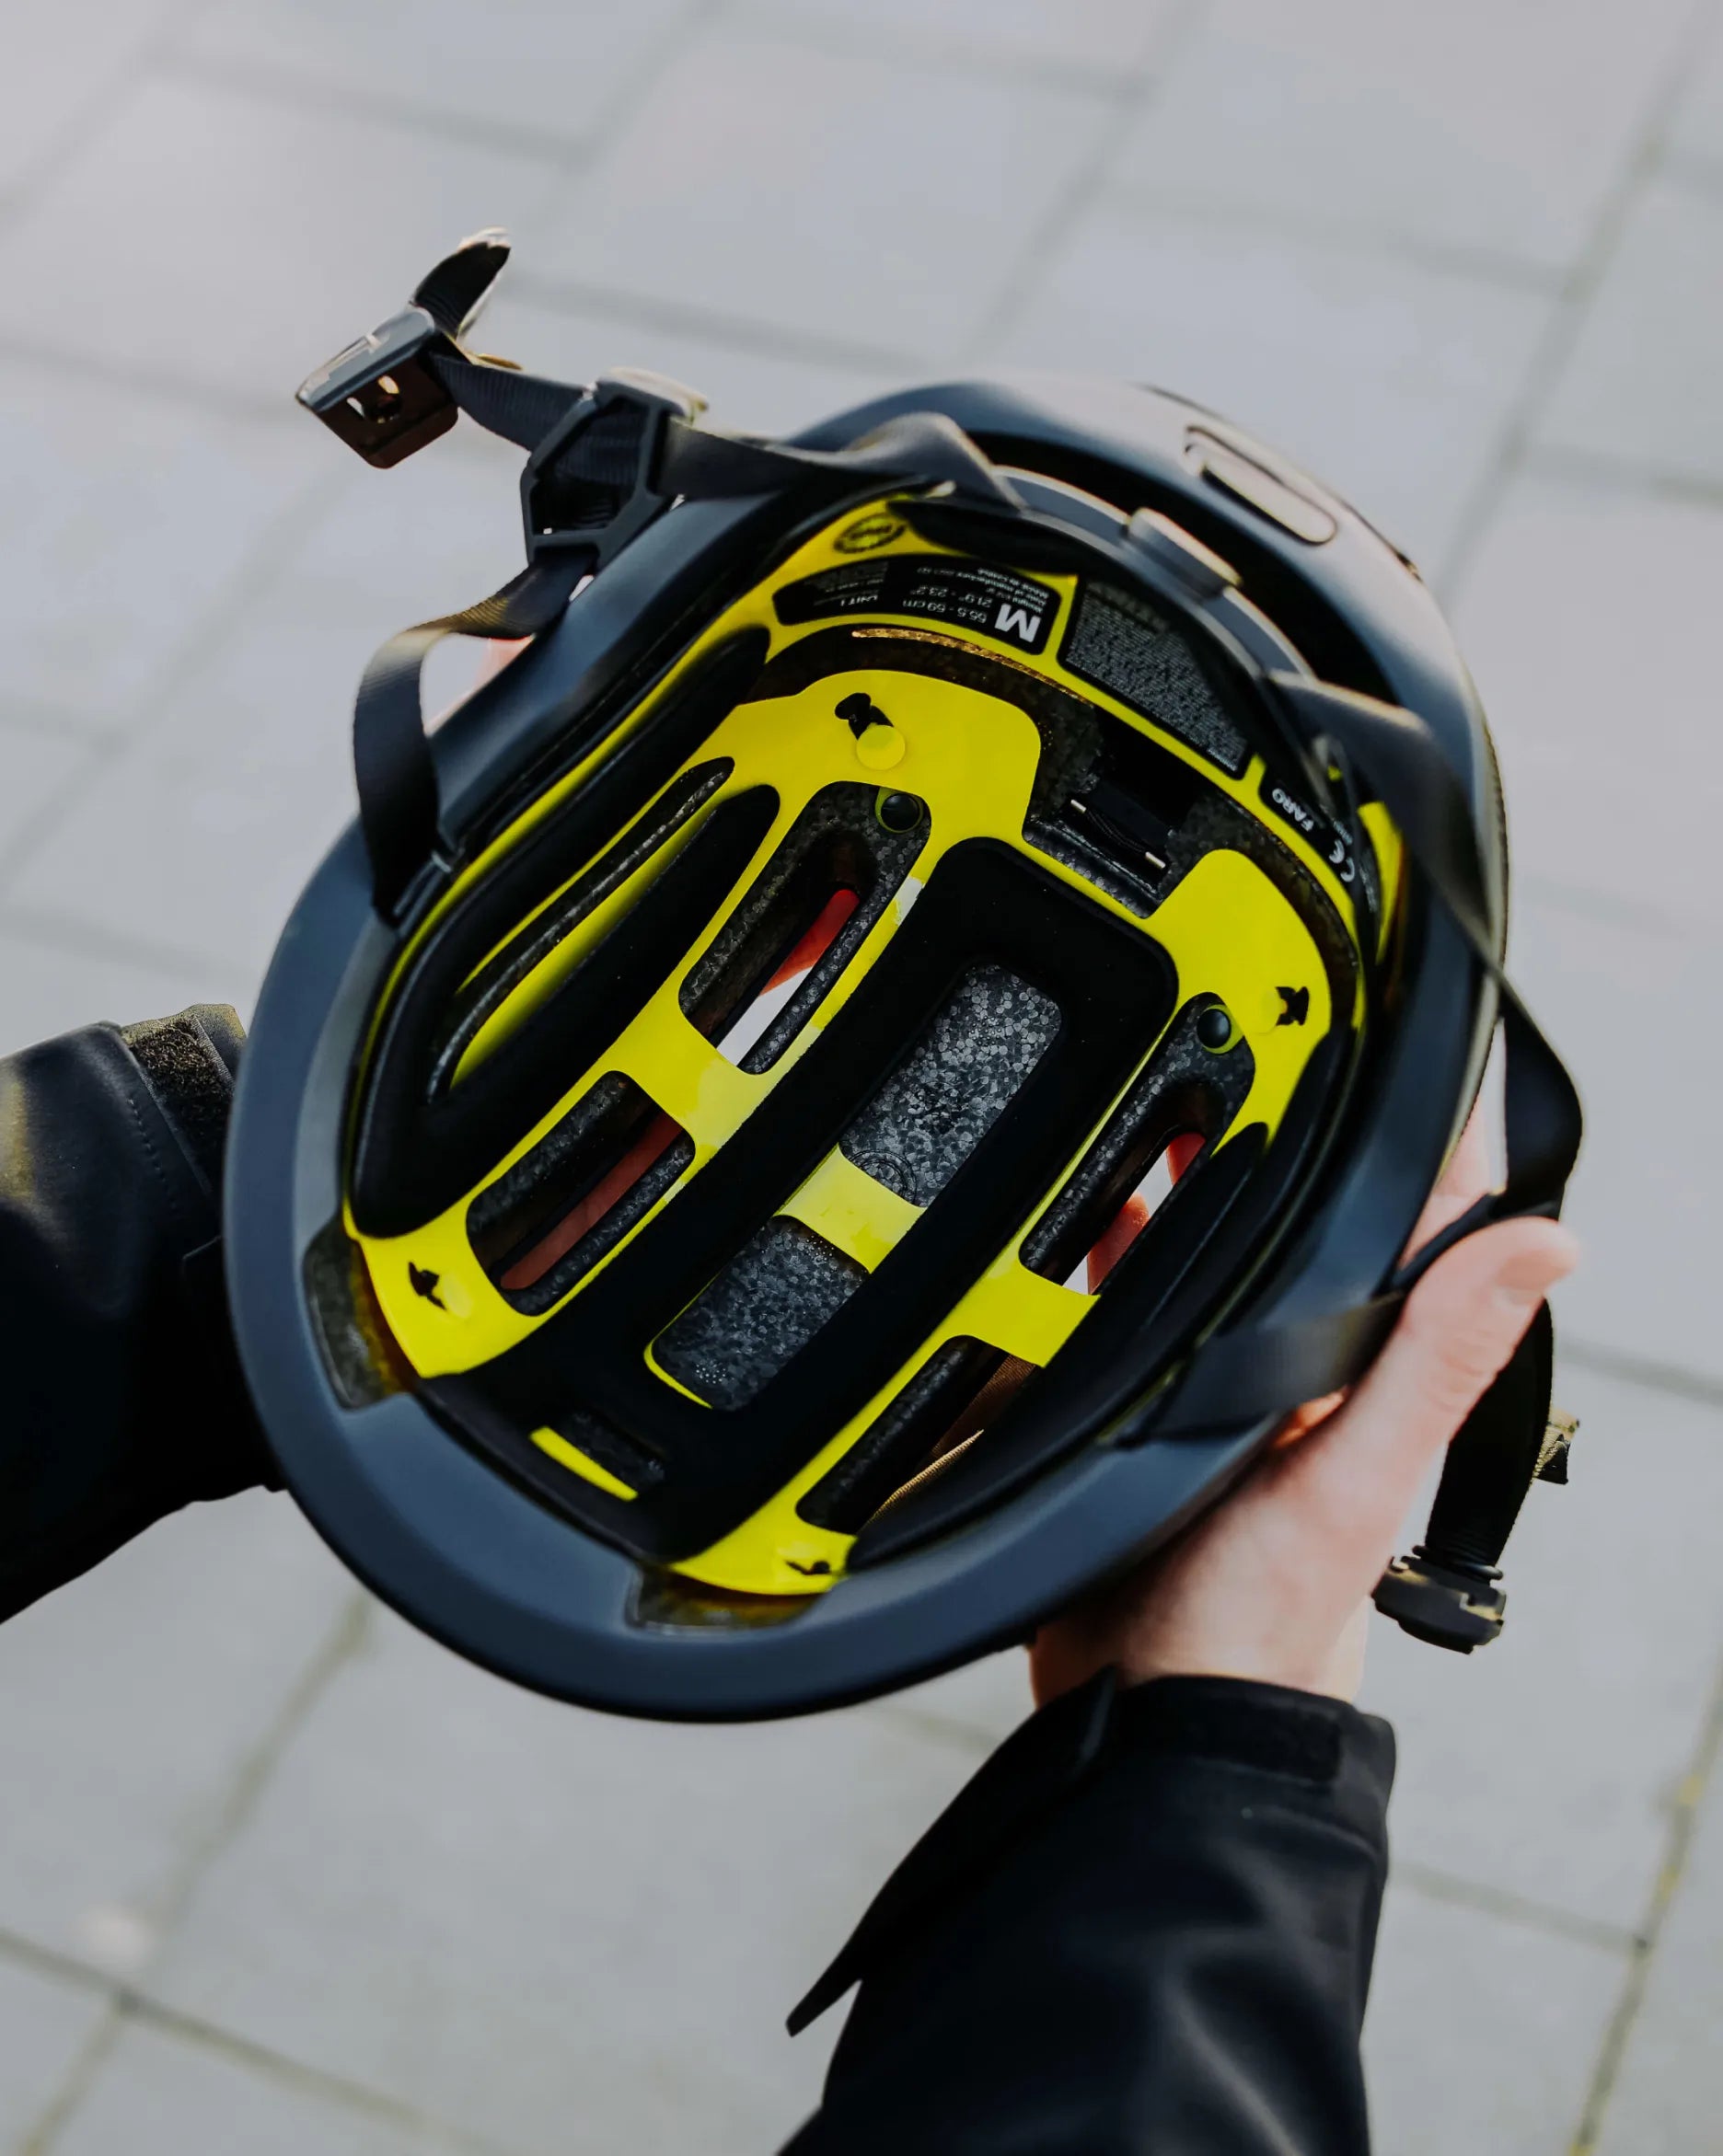 MIPS safety system in FARO smart helmet | UNIT 1